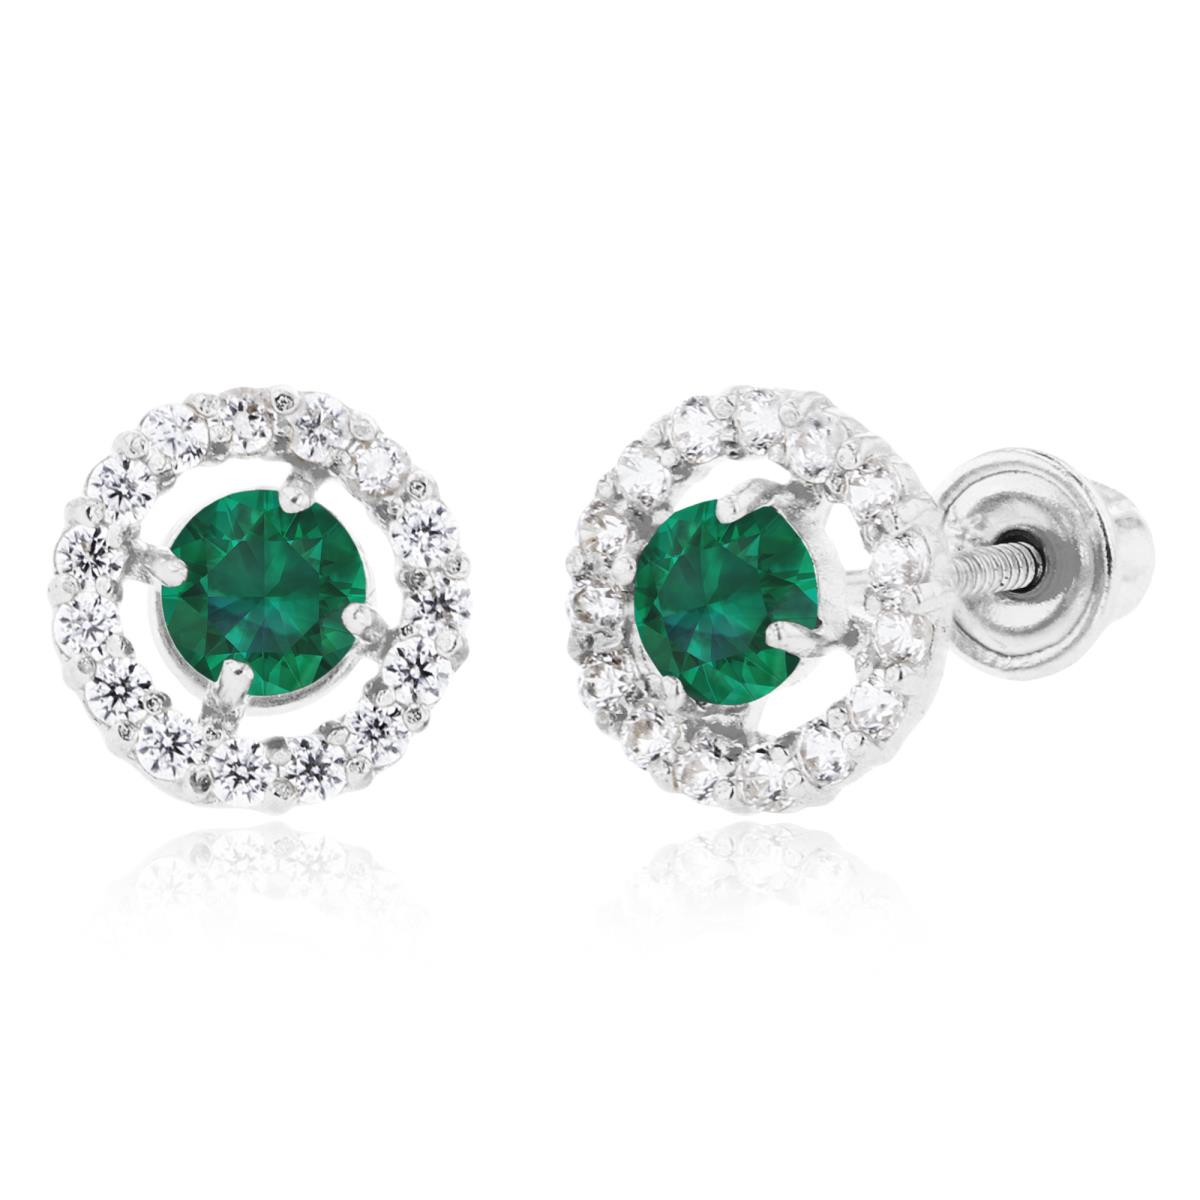 14K White Gold 3mm Created Emerald & 1mm Created White Sapphire Halo Screwback Earrings